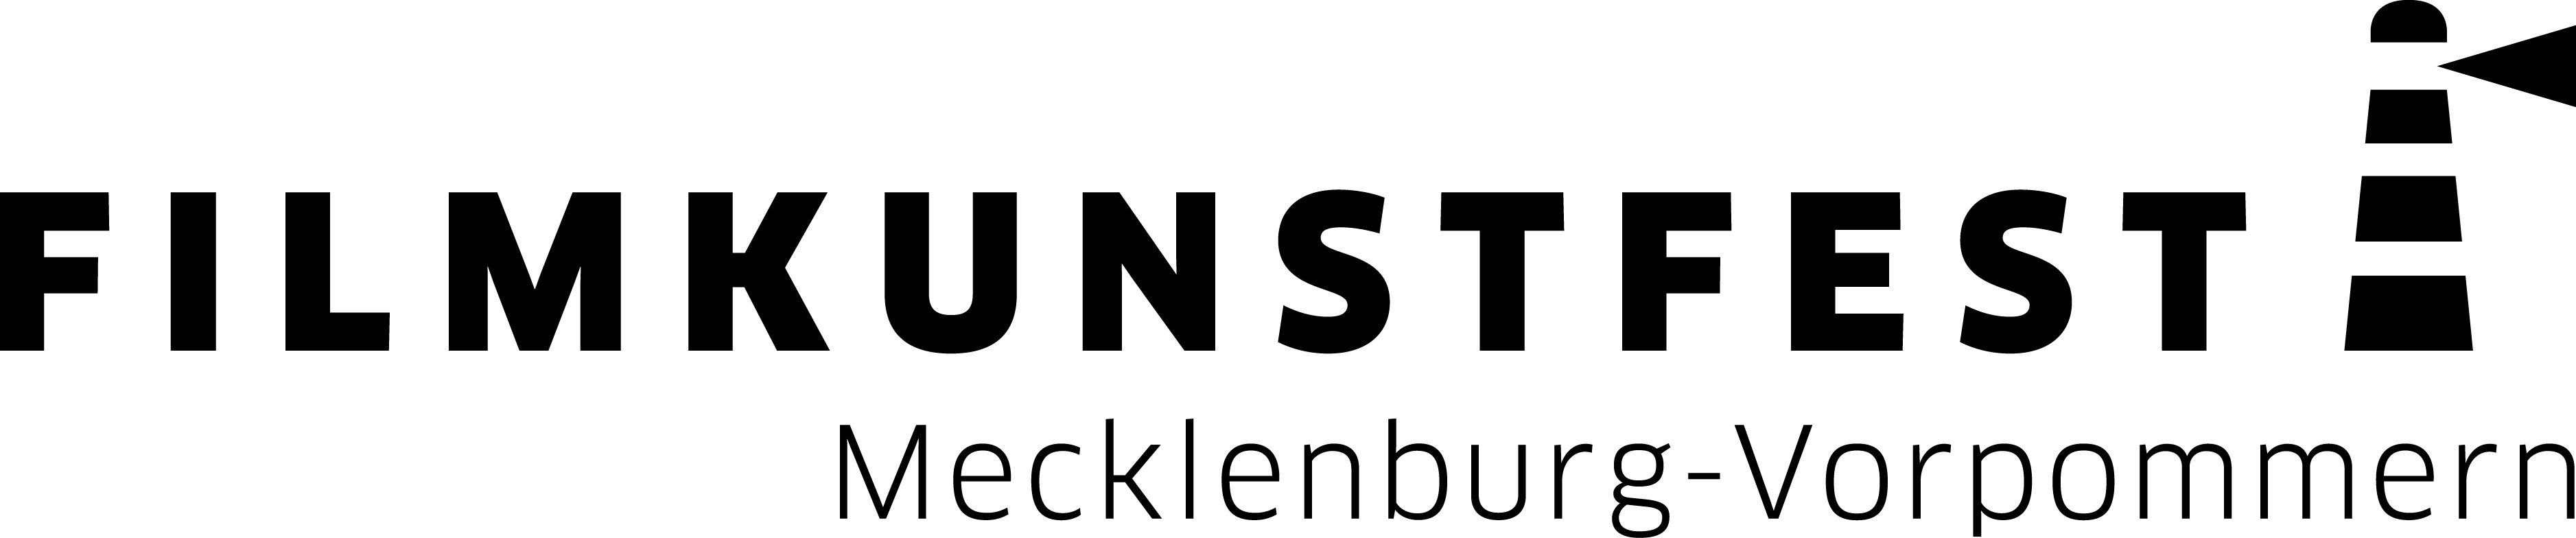 Filmkunstfest Mecklenburg Vorpommern